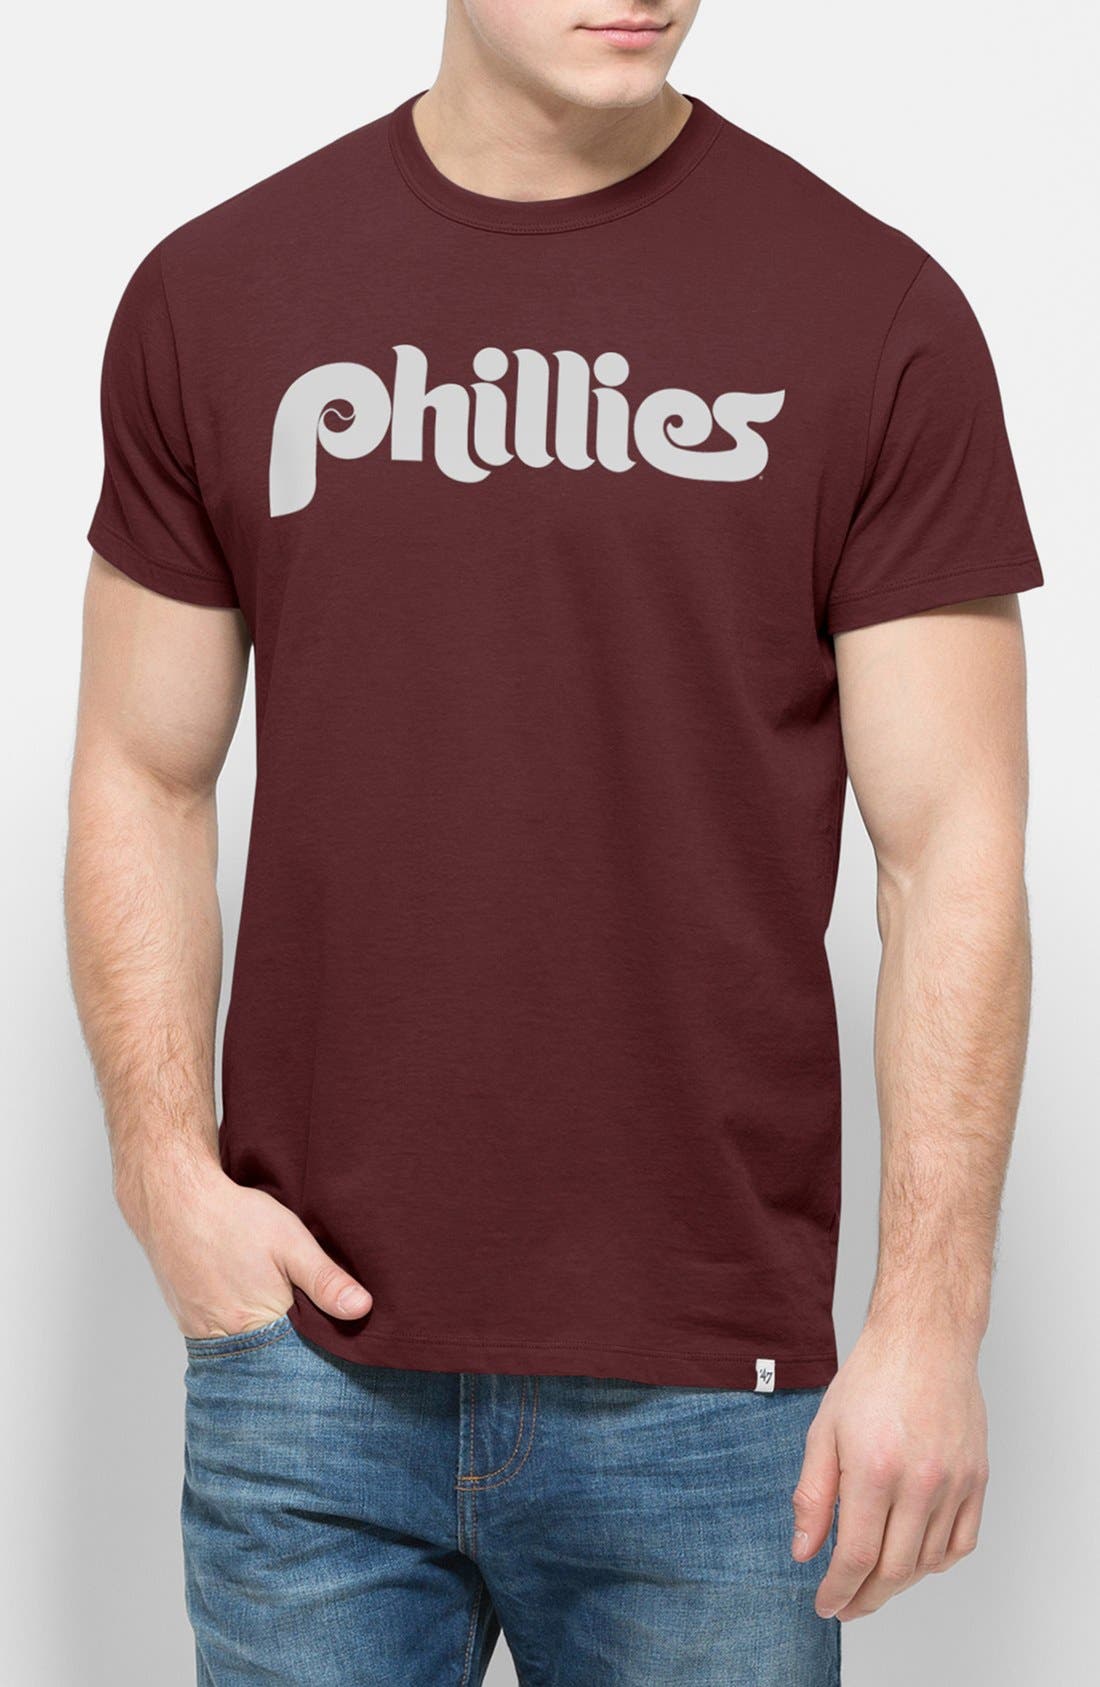 phillies maroon t shirt